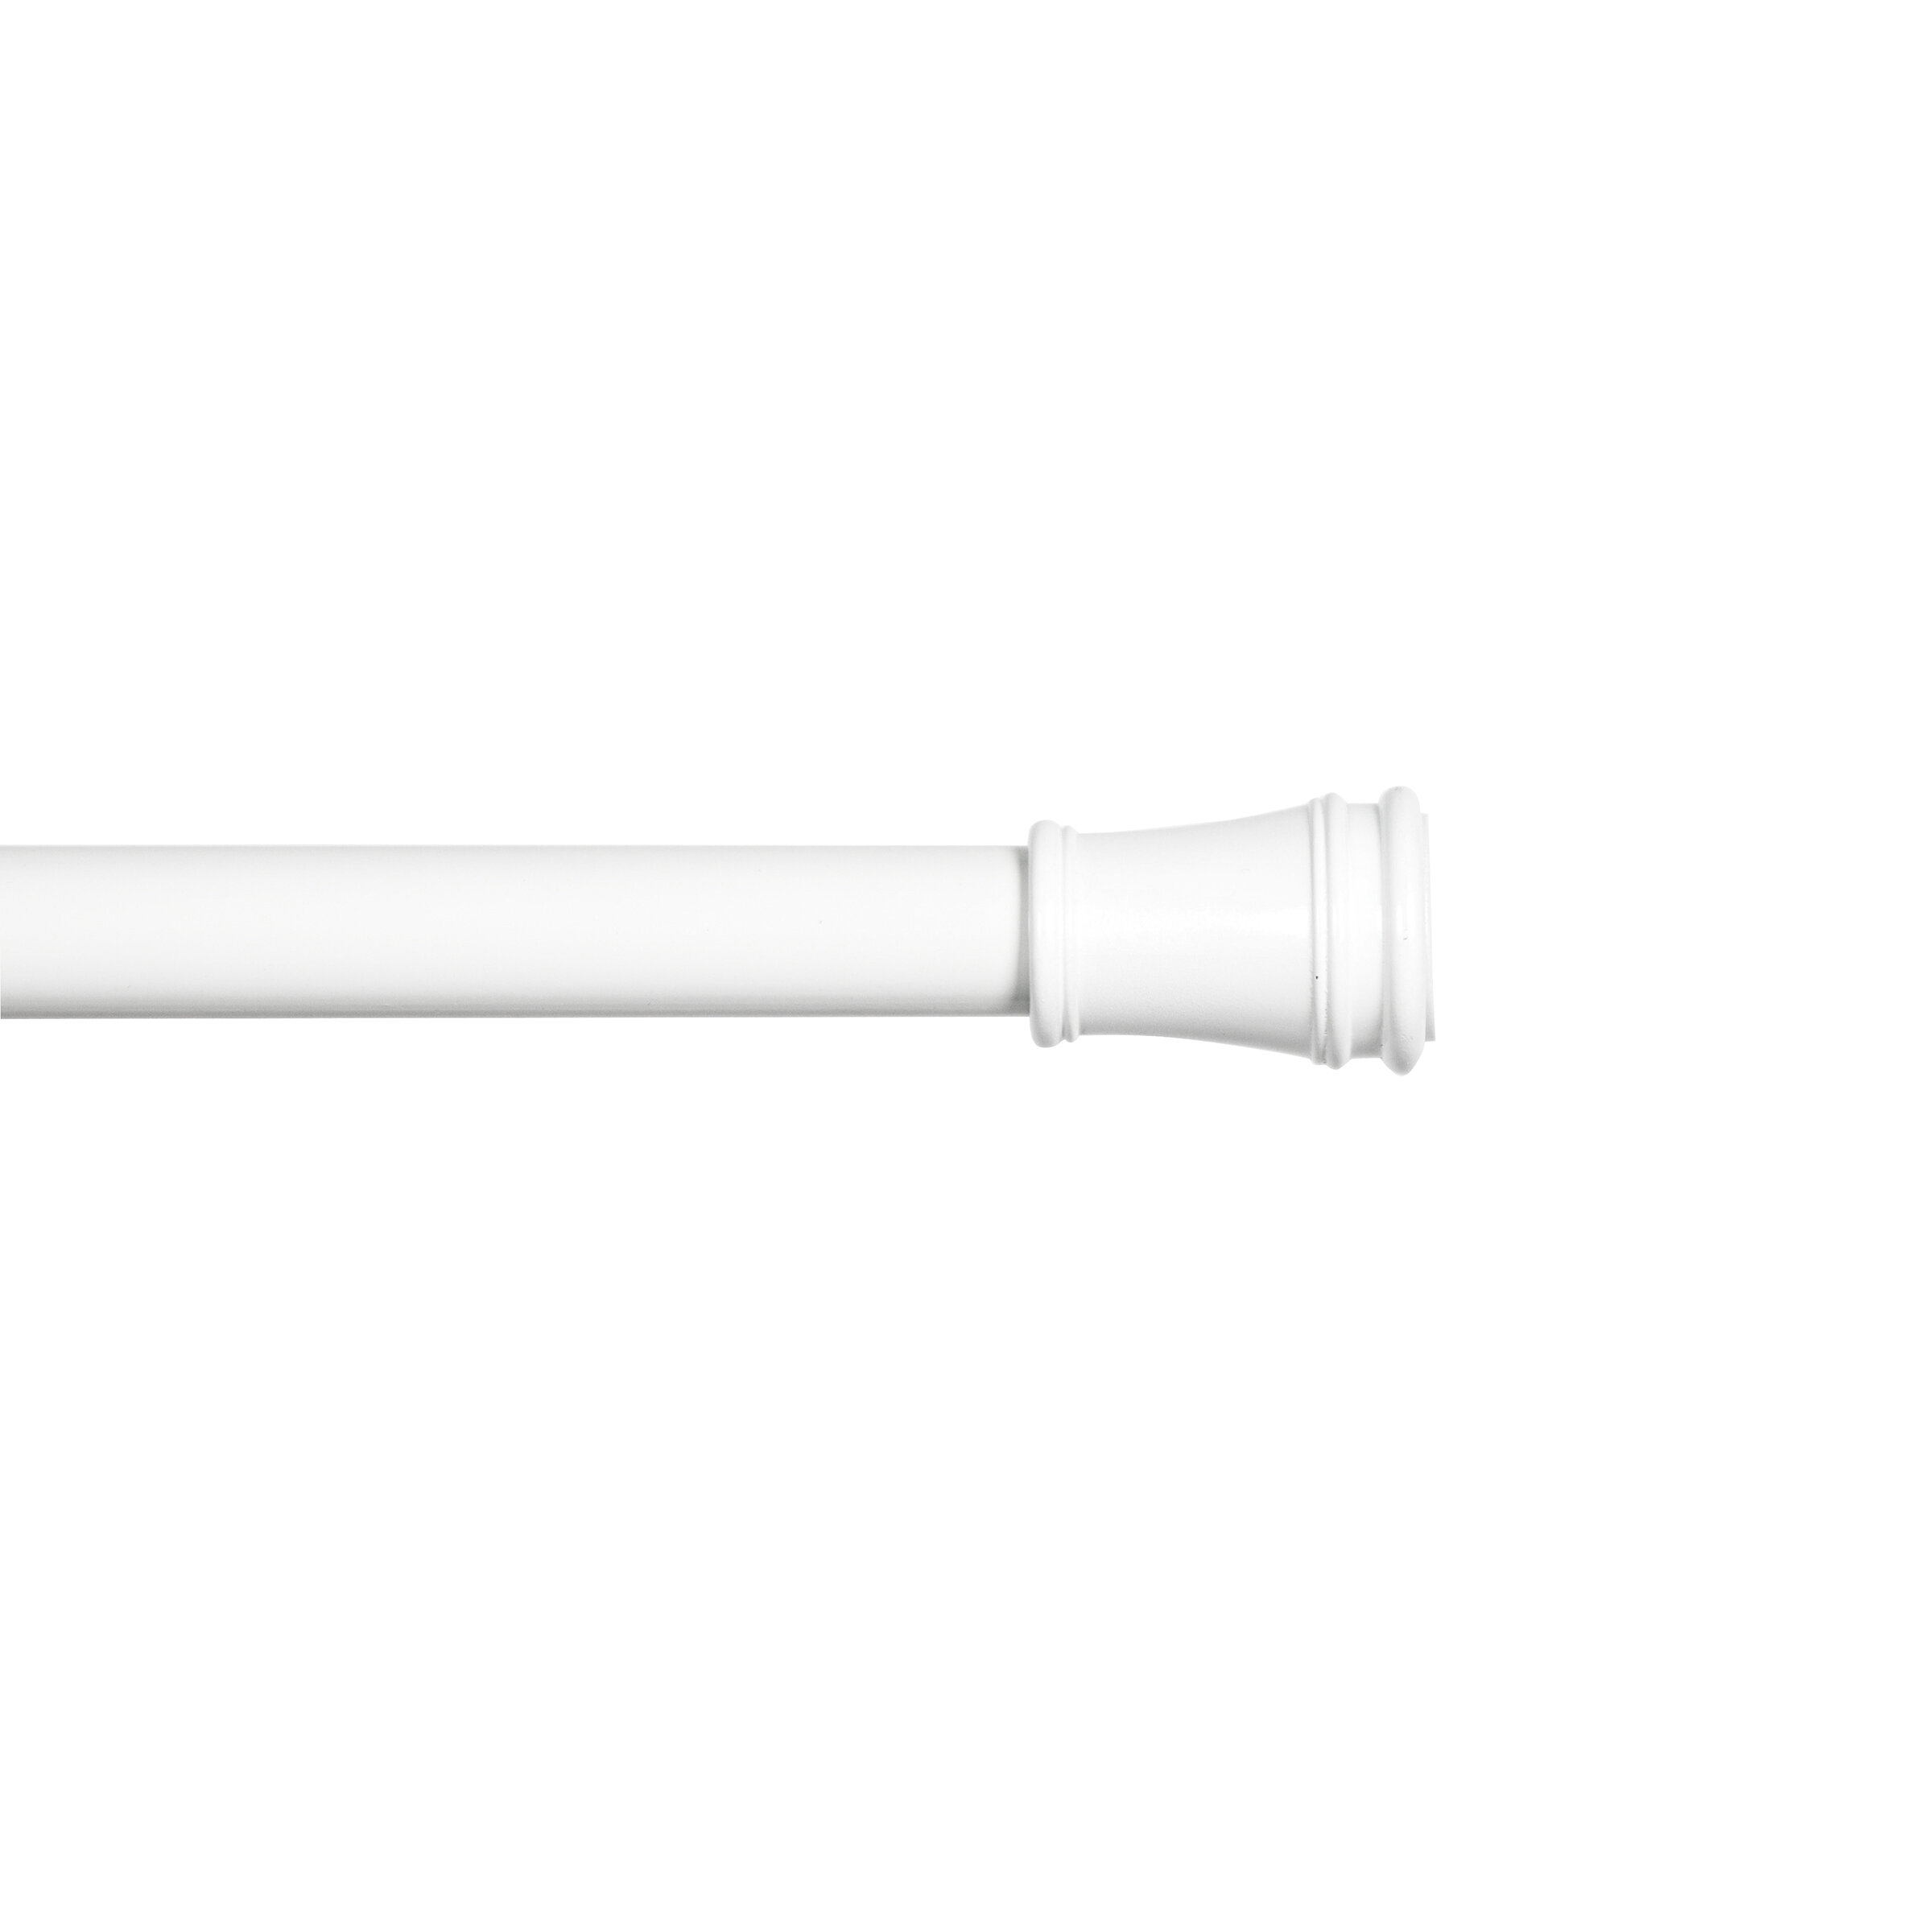 Wayfair Basics Bruss Camlock Tension Rod, 28-48 or 48-84 Adjustable Length, 5/8 Dia. Steel Tube Wayfair Basics Size: 28 - 48, Finish: White